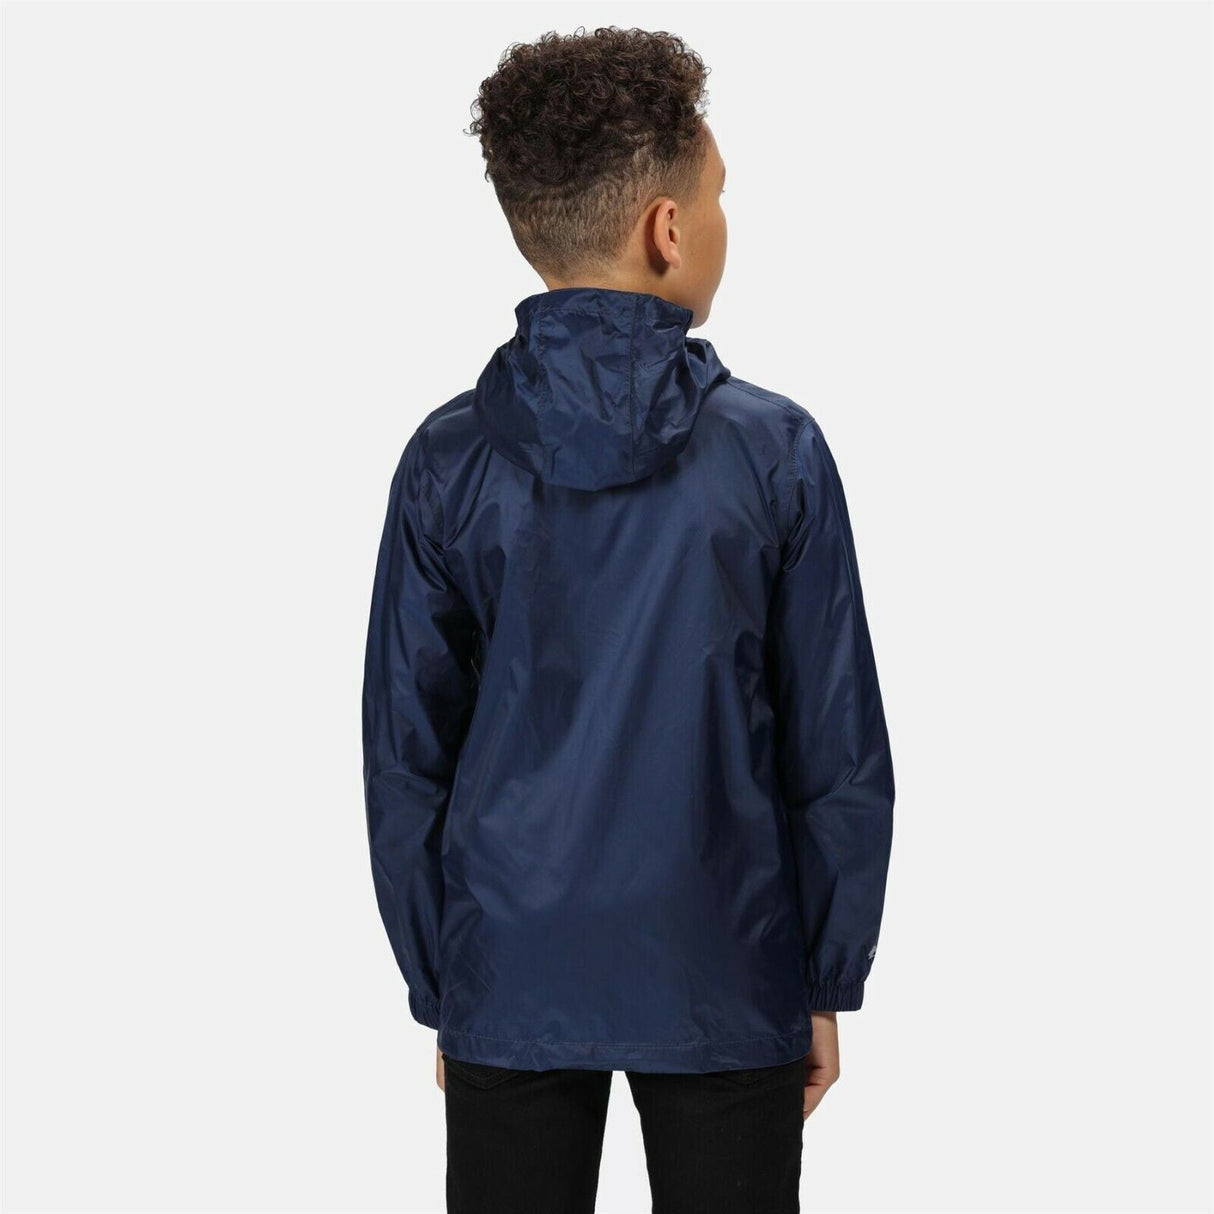 Regatta Kids Stormbreak Waterproof Jacket - Premium clothing from Regatta - Just $10.99! Shop now at Warwickshire Clothing